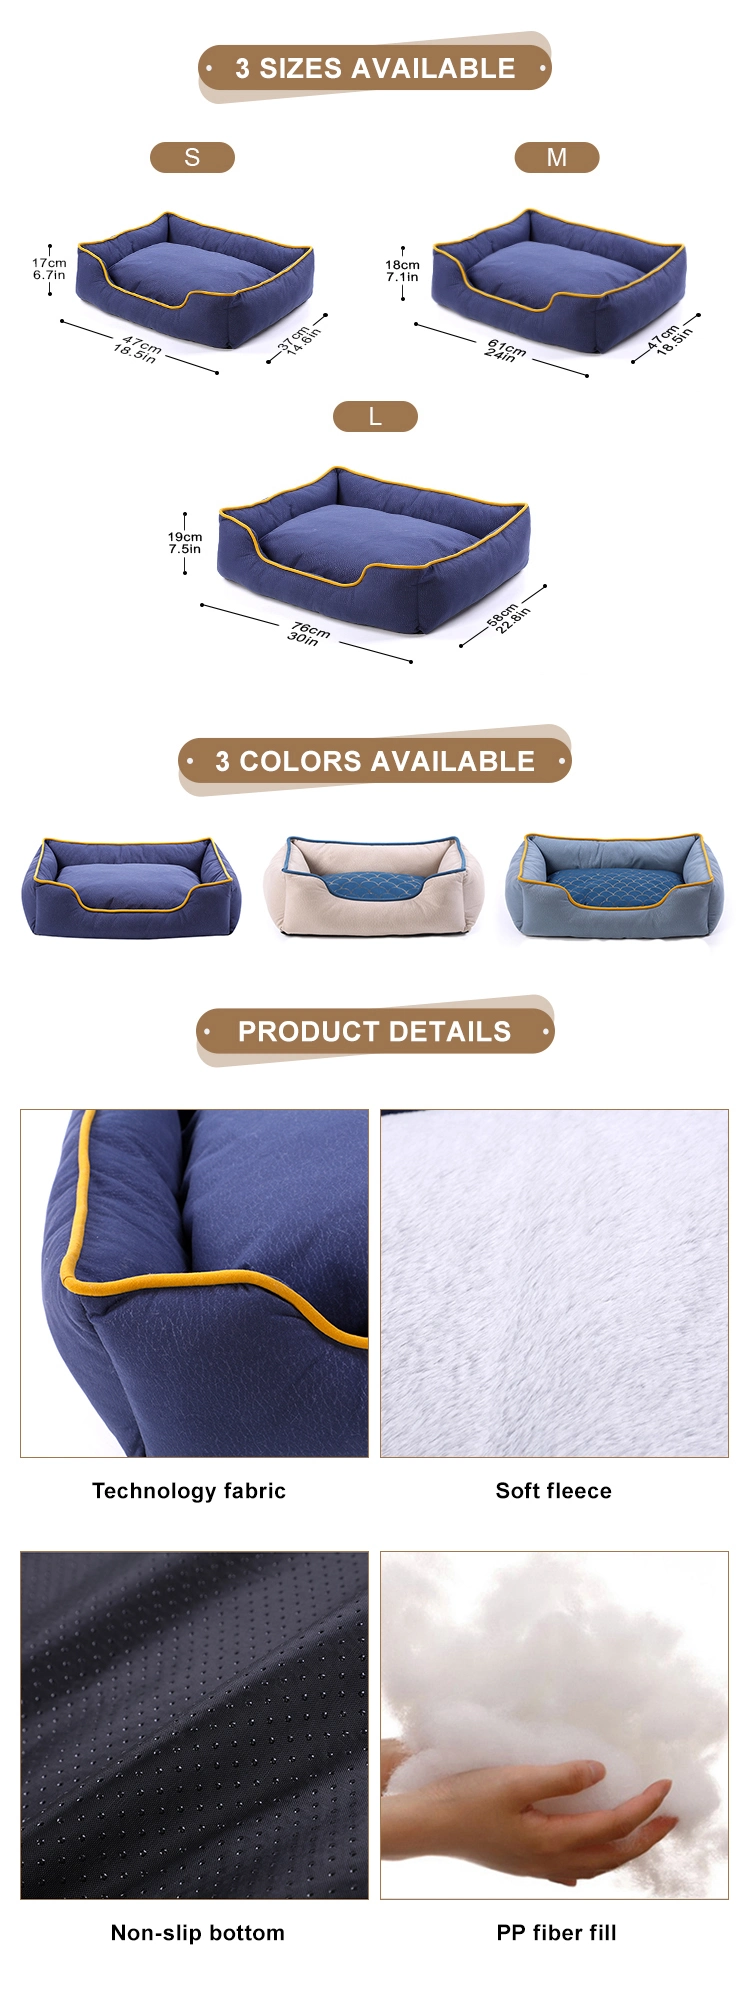 Luxury Washable Technology Fabric Fleece Waterproof Large Dog Pet Bed with Detachable Cushion